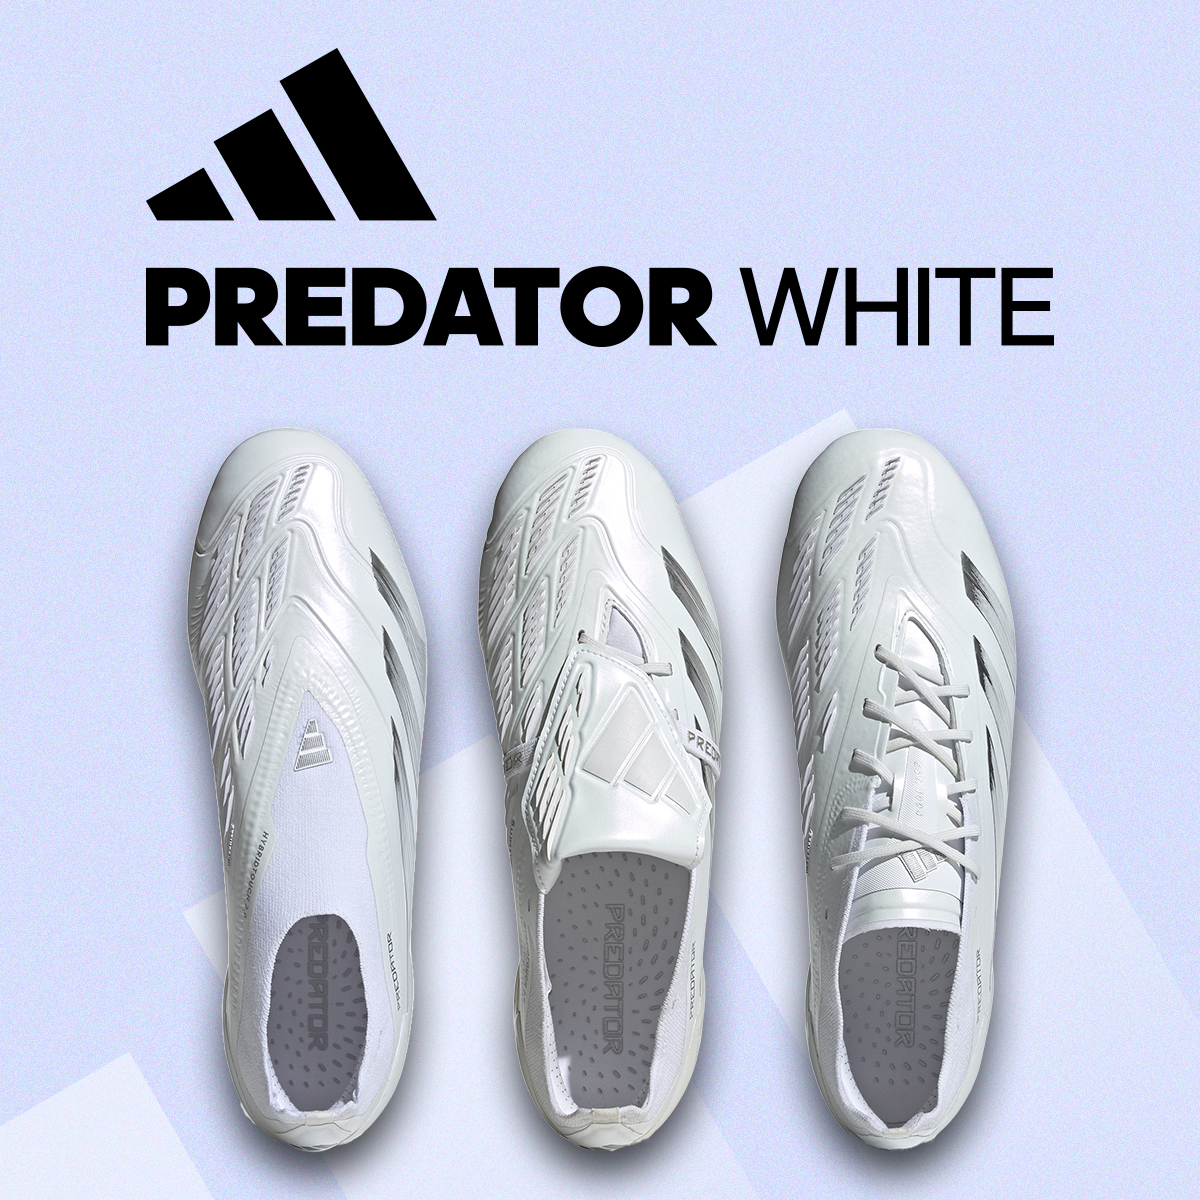 Predator White Pack